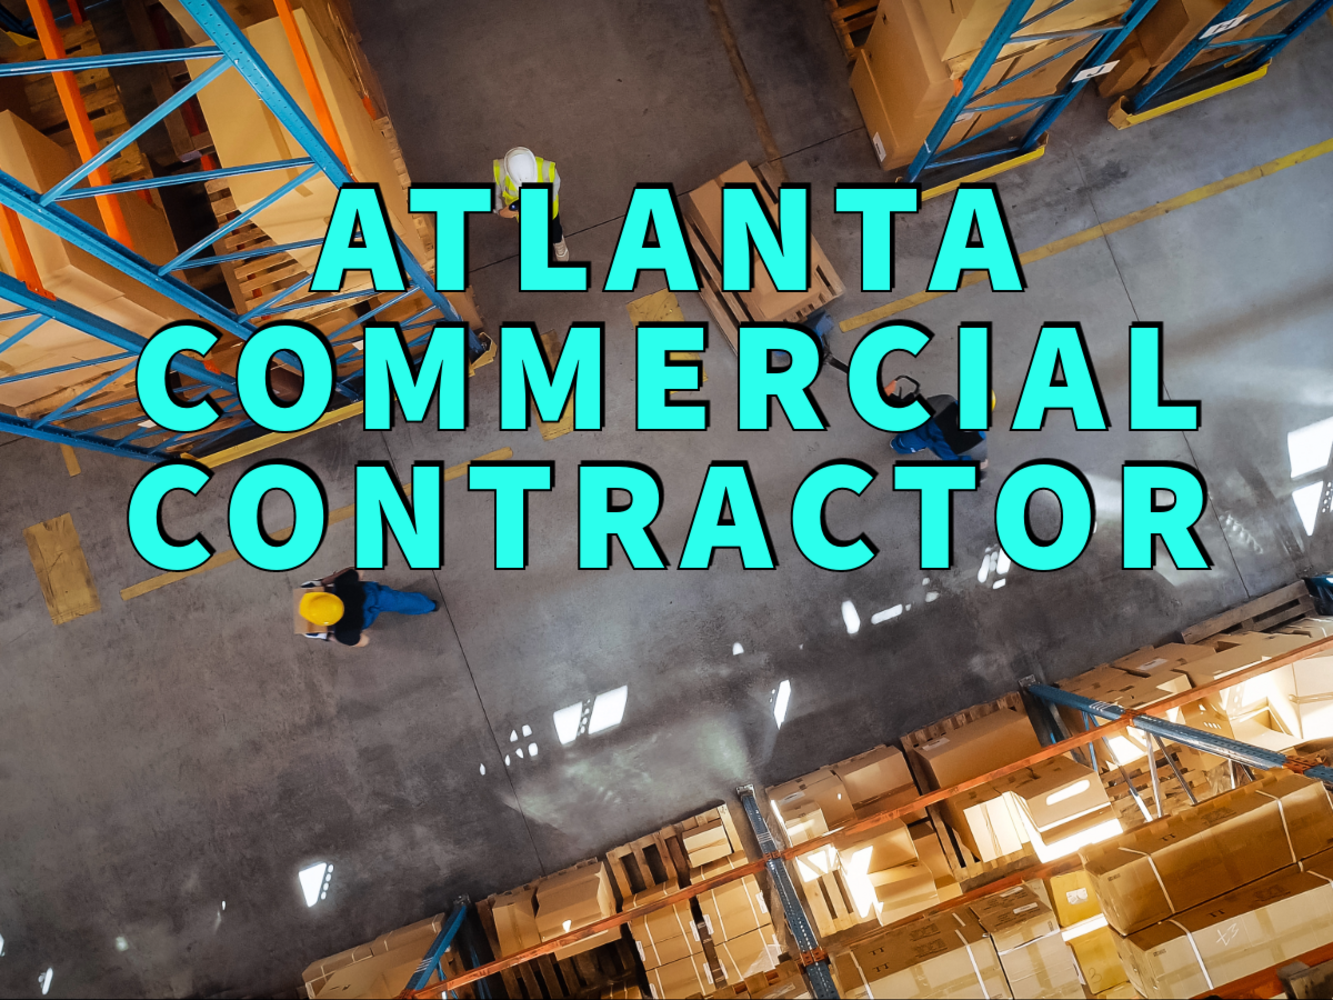 Atlanta commercial contractor written in teal over overhead shot of warehouse floor with workers